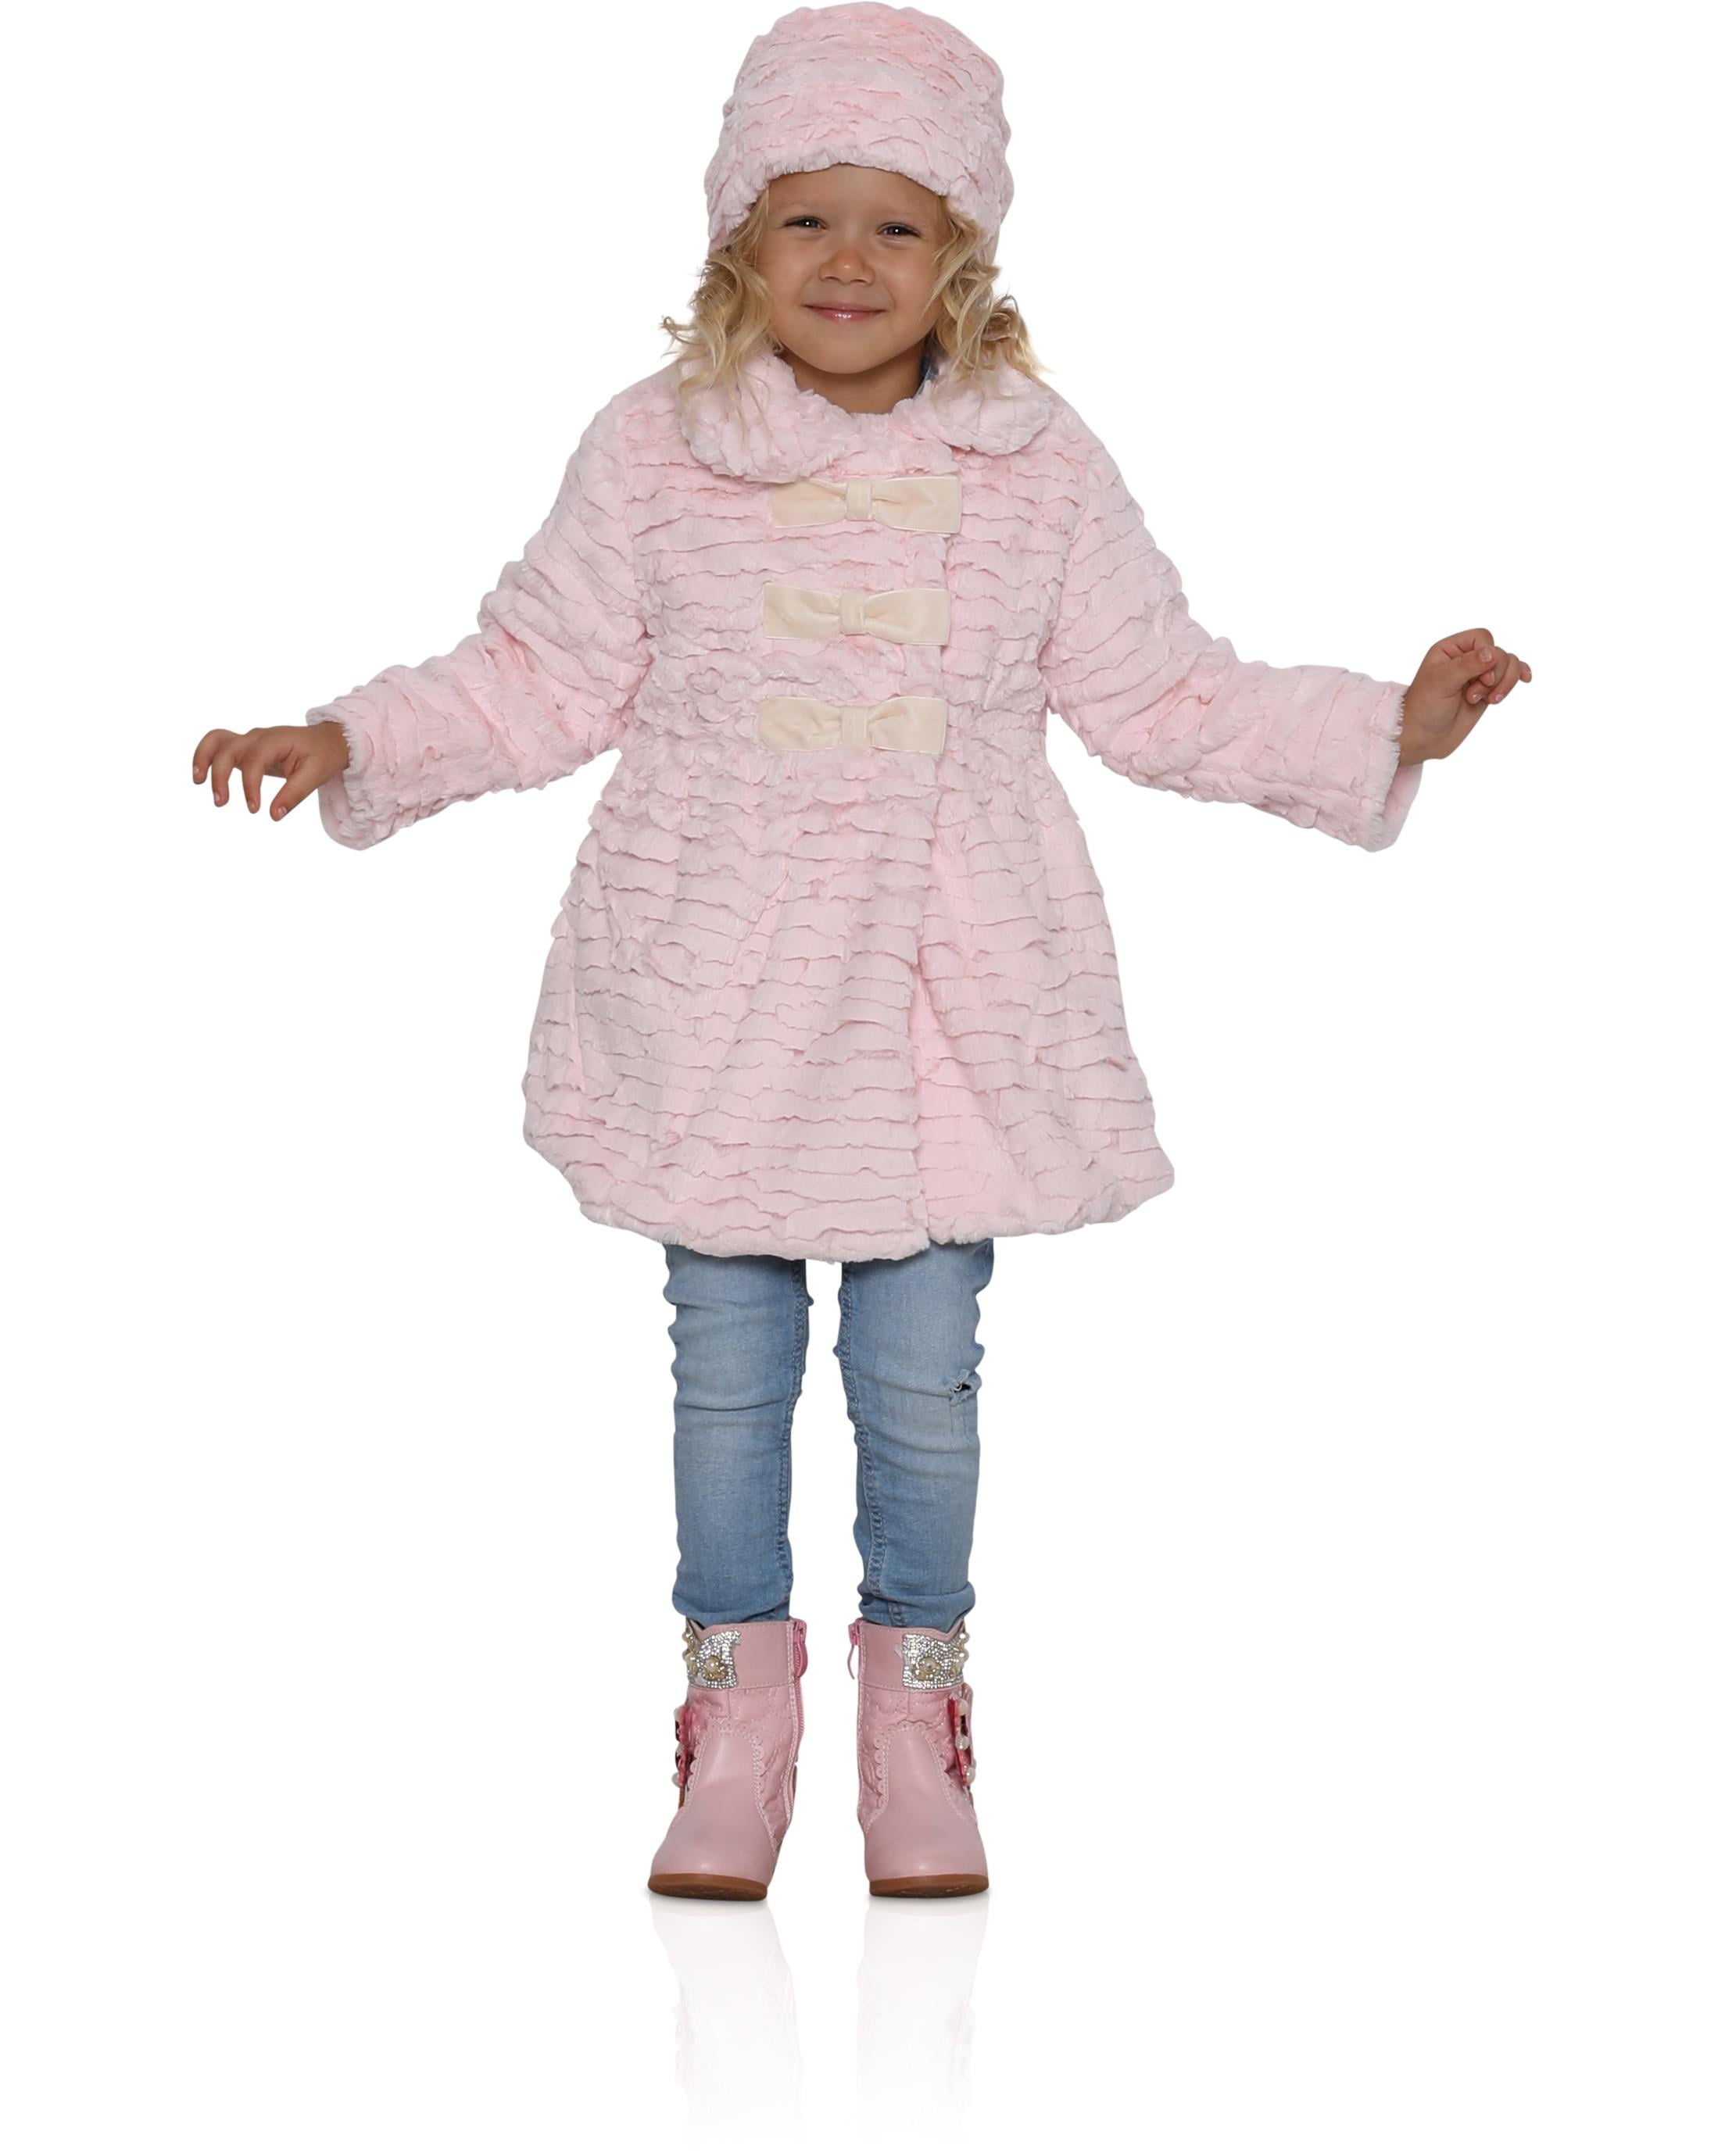 NEW AMERICAN WIDGEON Girl's Soft Plush FAUX FUR Coat Jacket Hot Pink 3T 